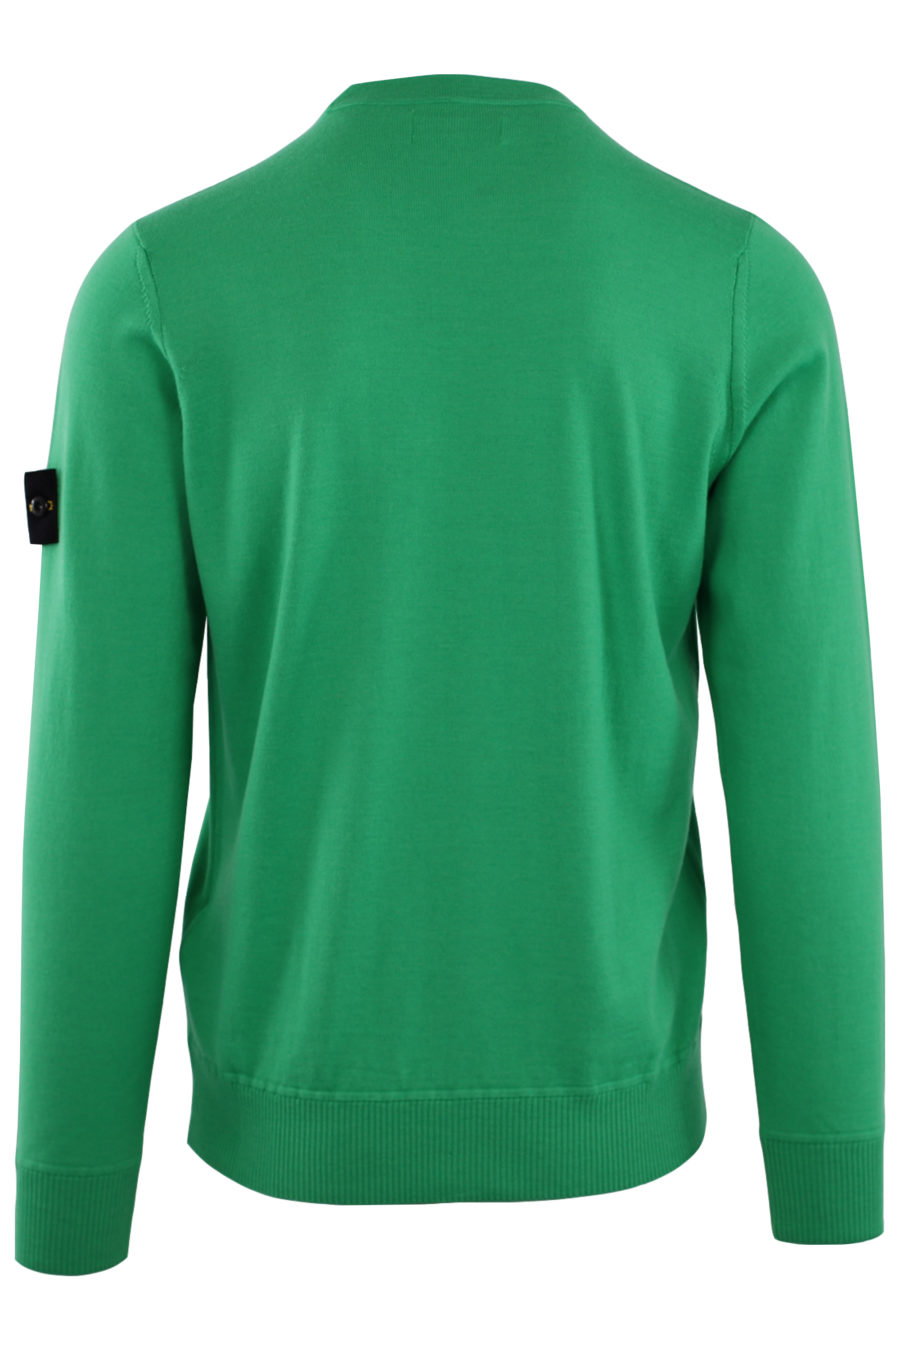 Jersey verde de lana con logo parche - IMG 9130